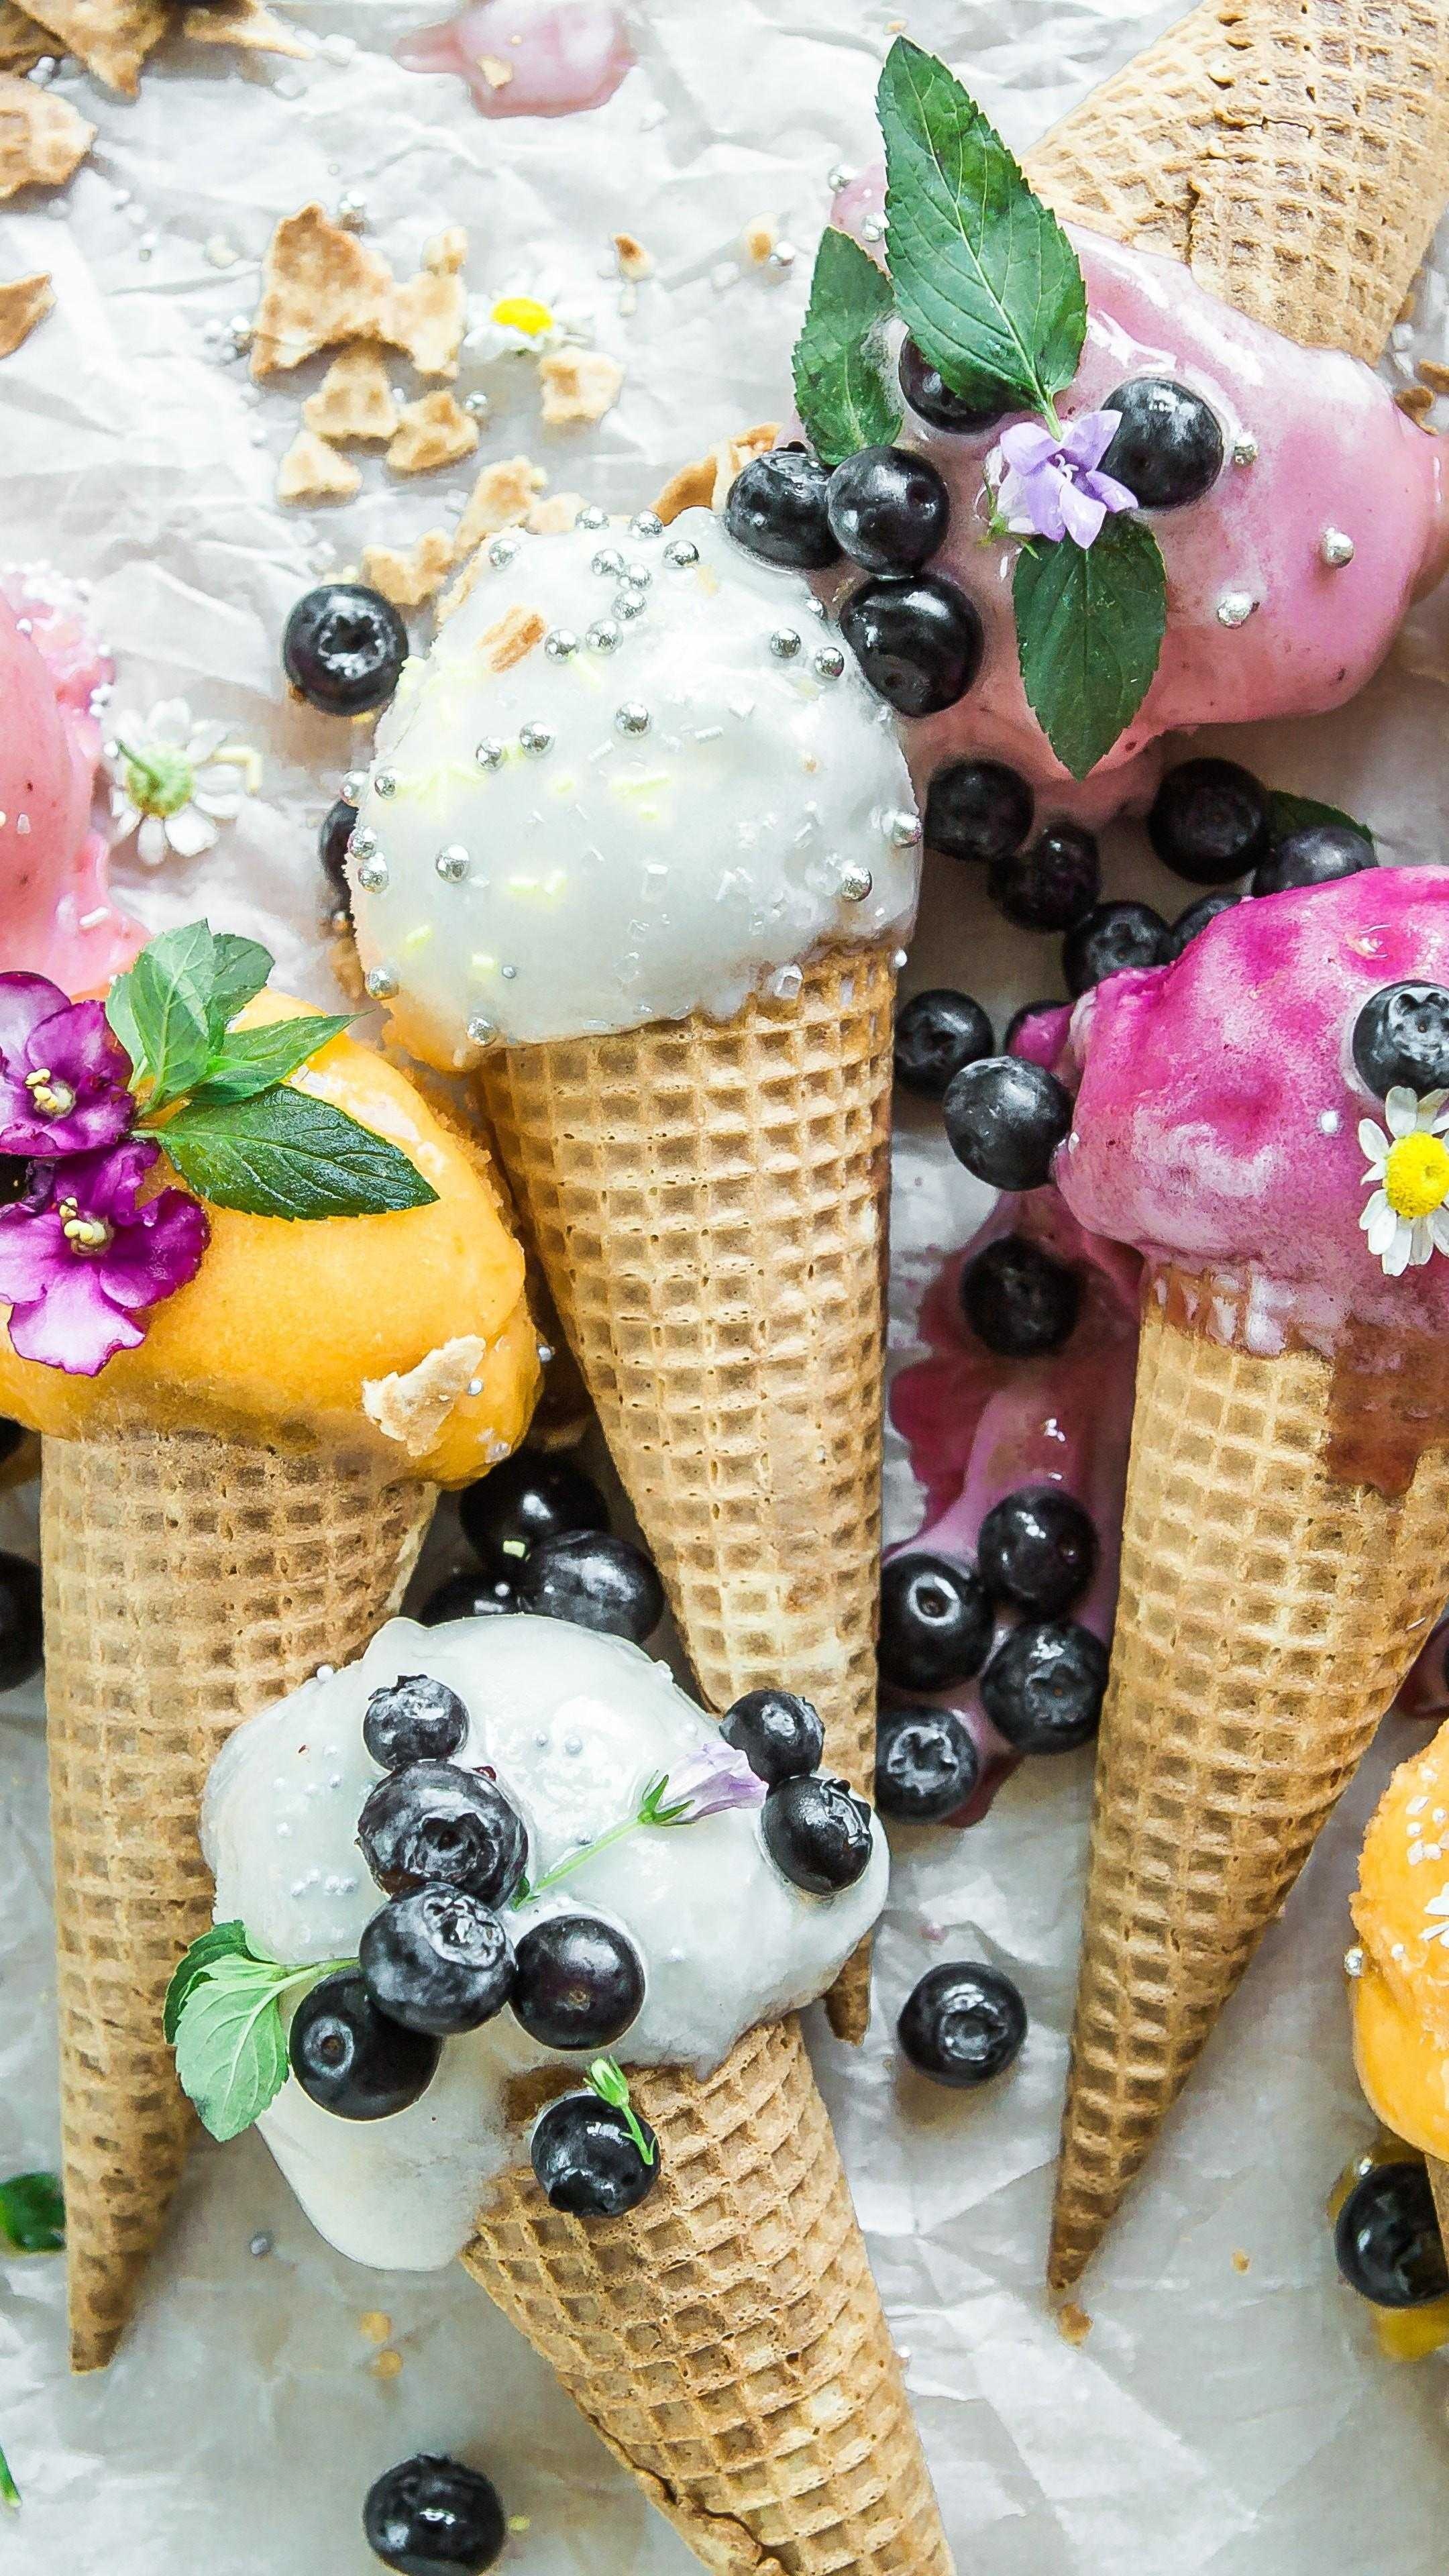 Gelato: Ice cream, Berries, Ice cream cone. 2160x3840 4K Wallpaper.